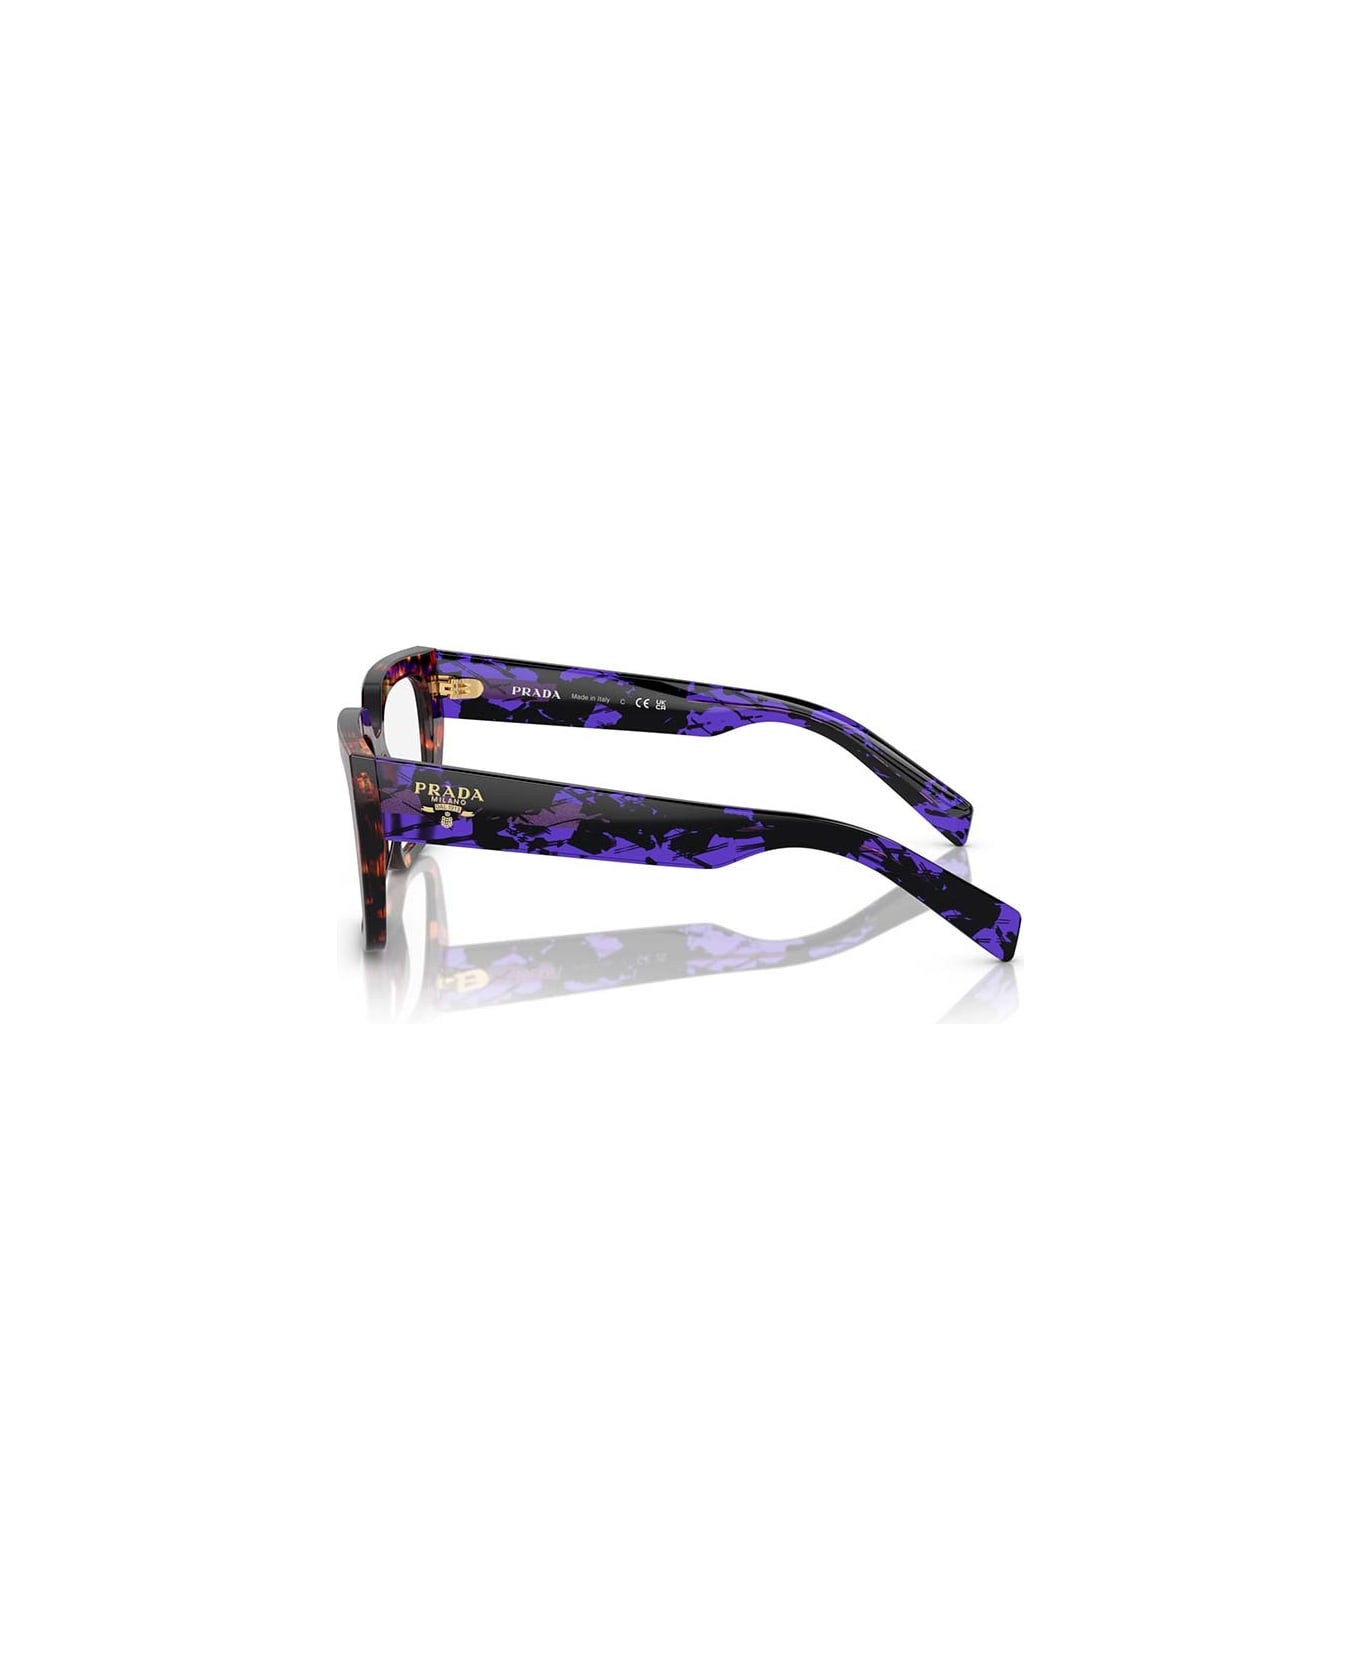 Prada Eyewear Glasses - Havana